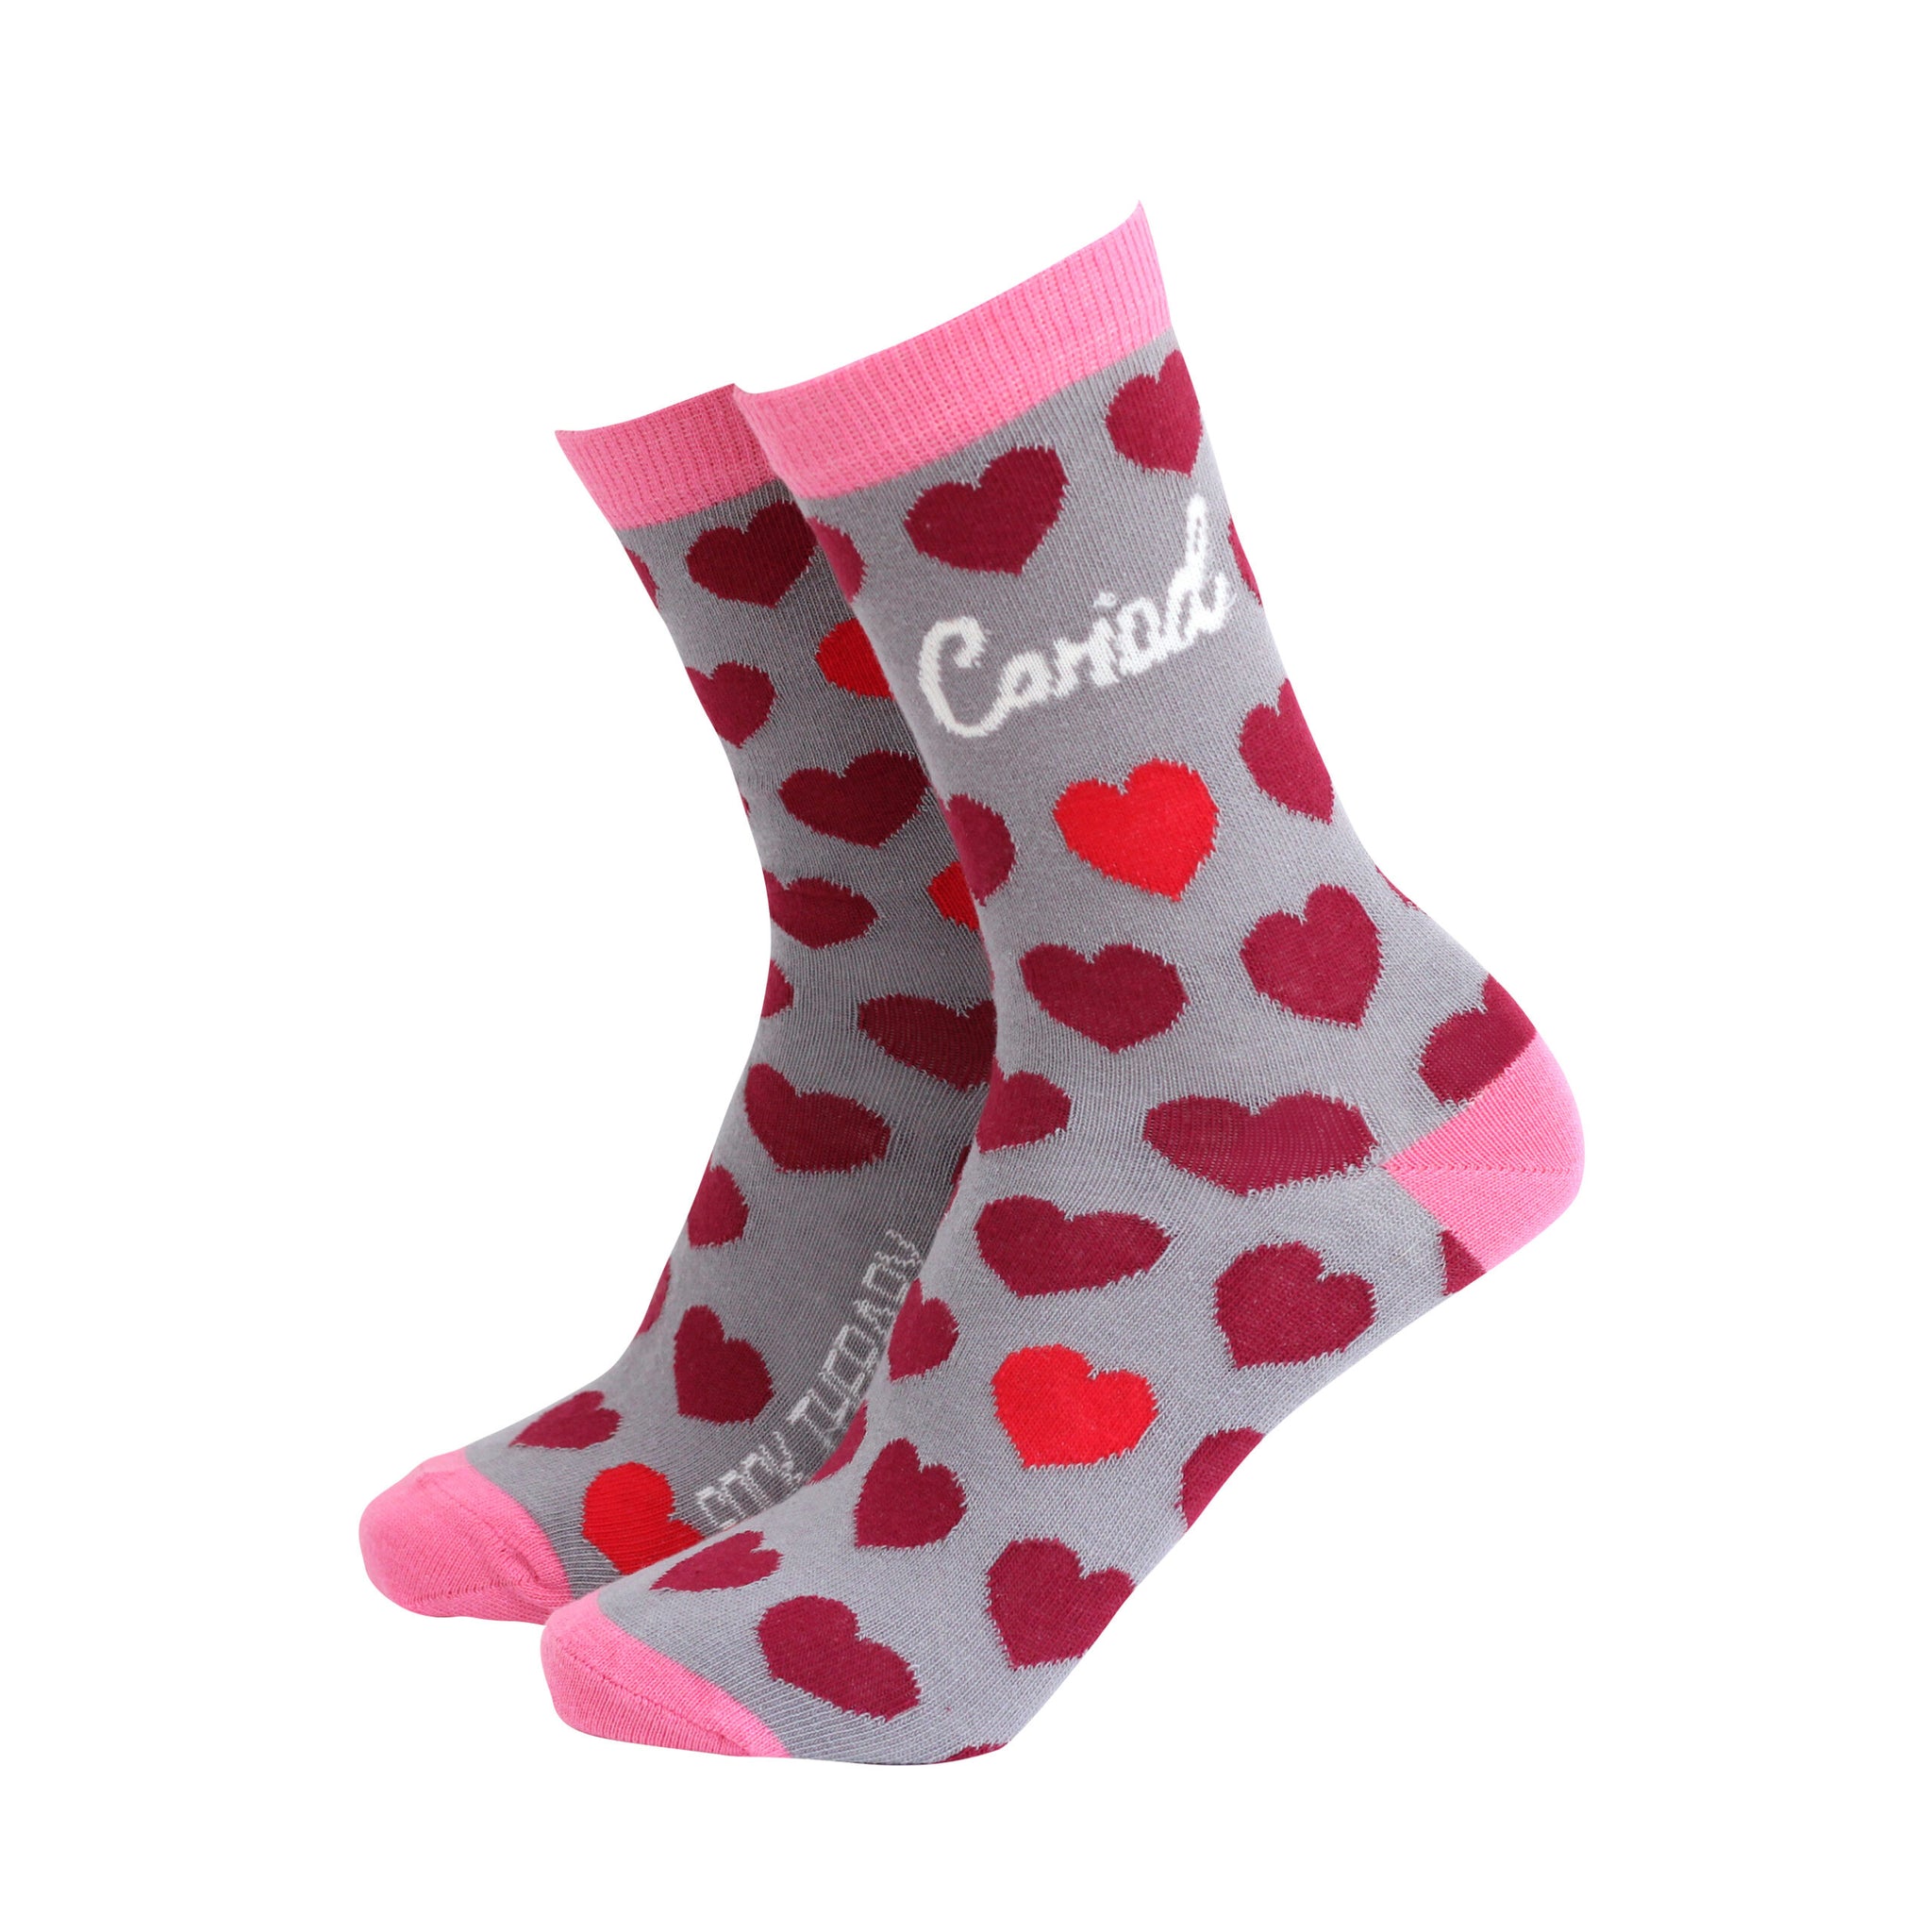 'Cariad' Women's Socks